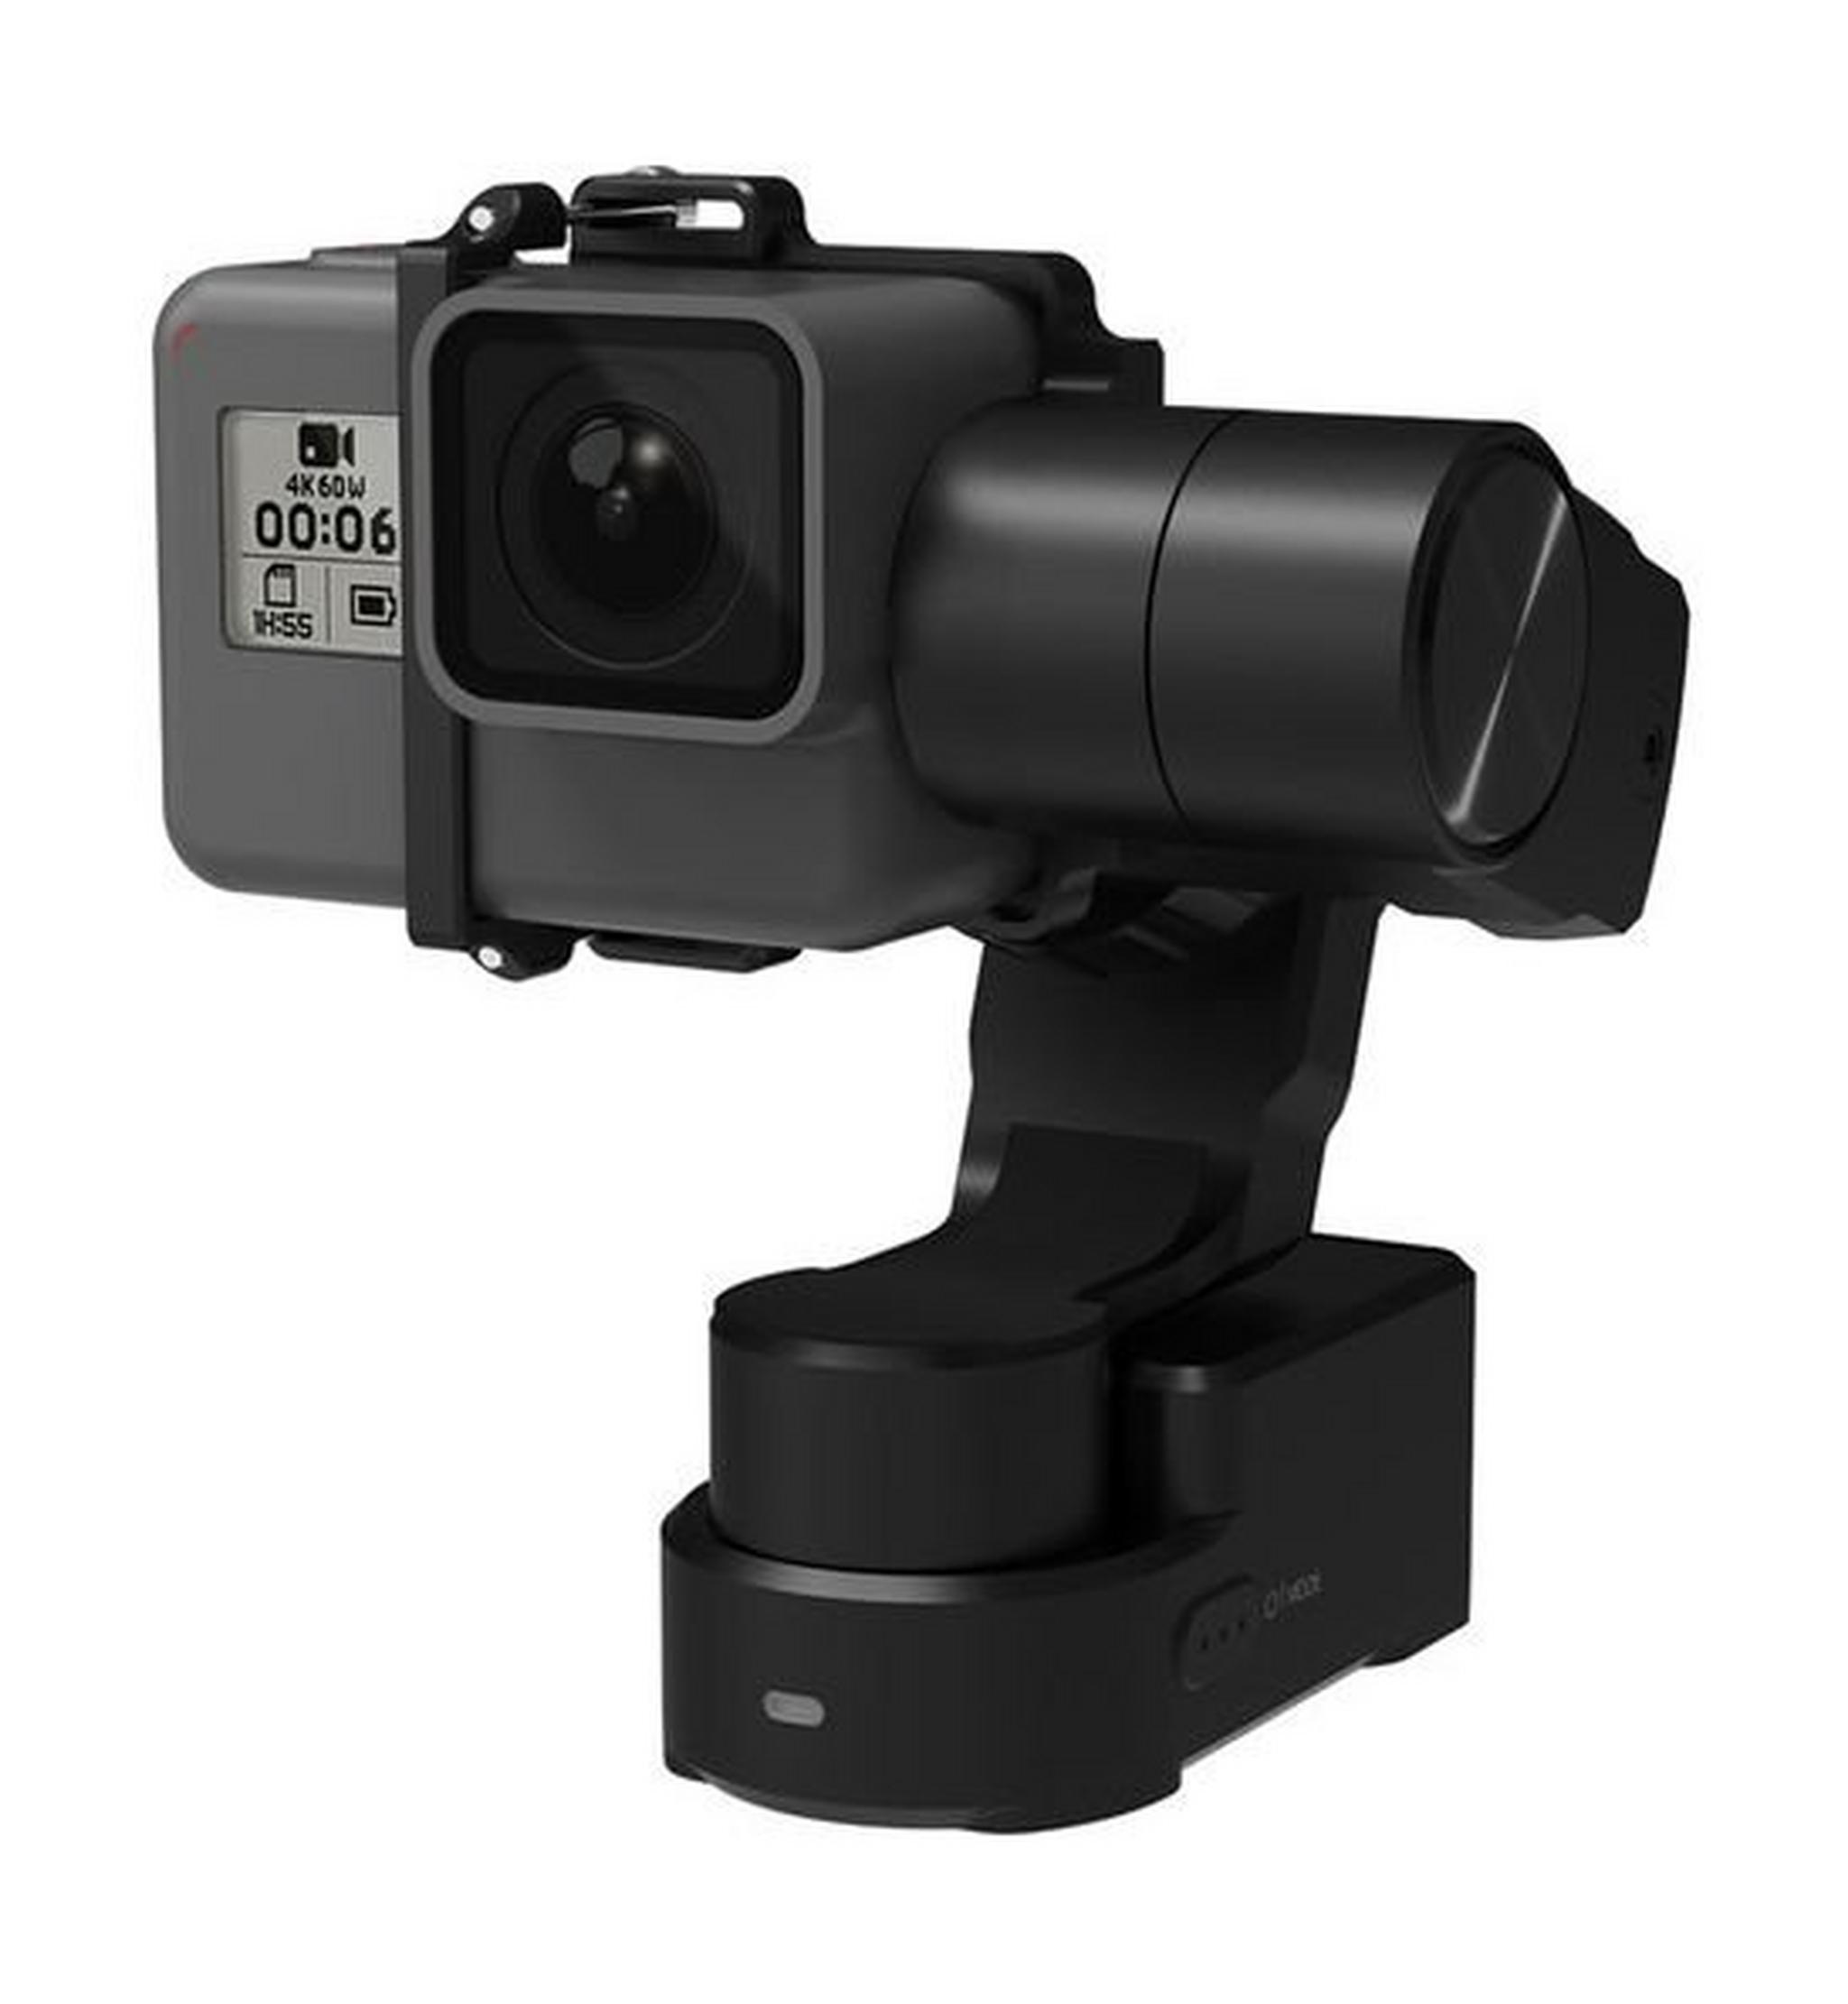 Feiyu 3-Axis Wearable Gimbal For Action Cams (WG2X)